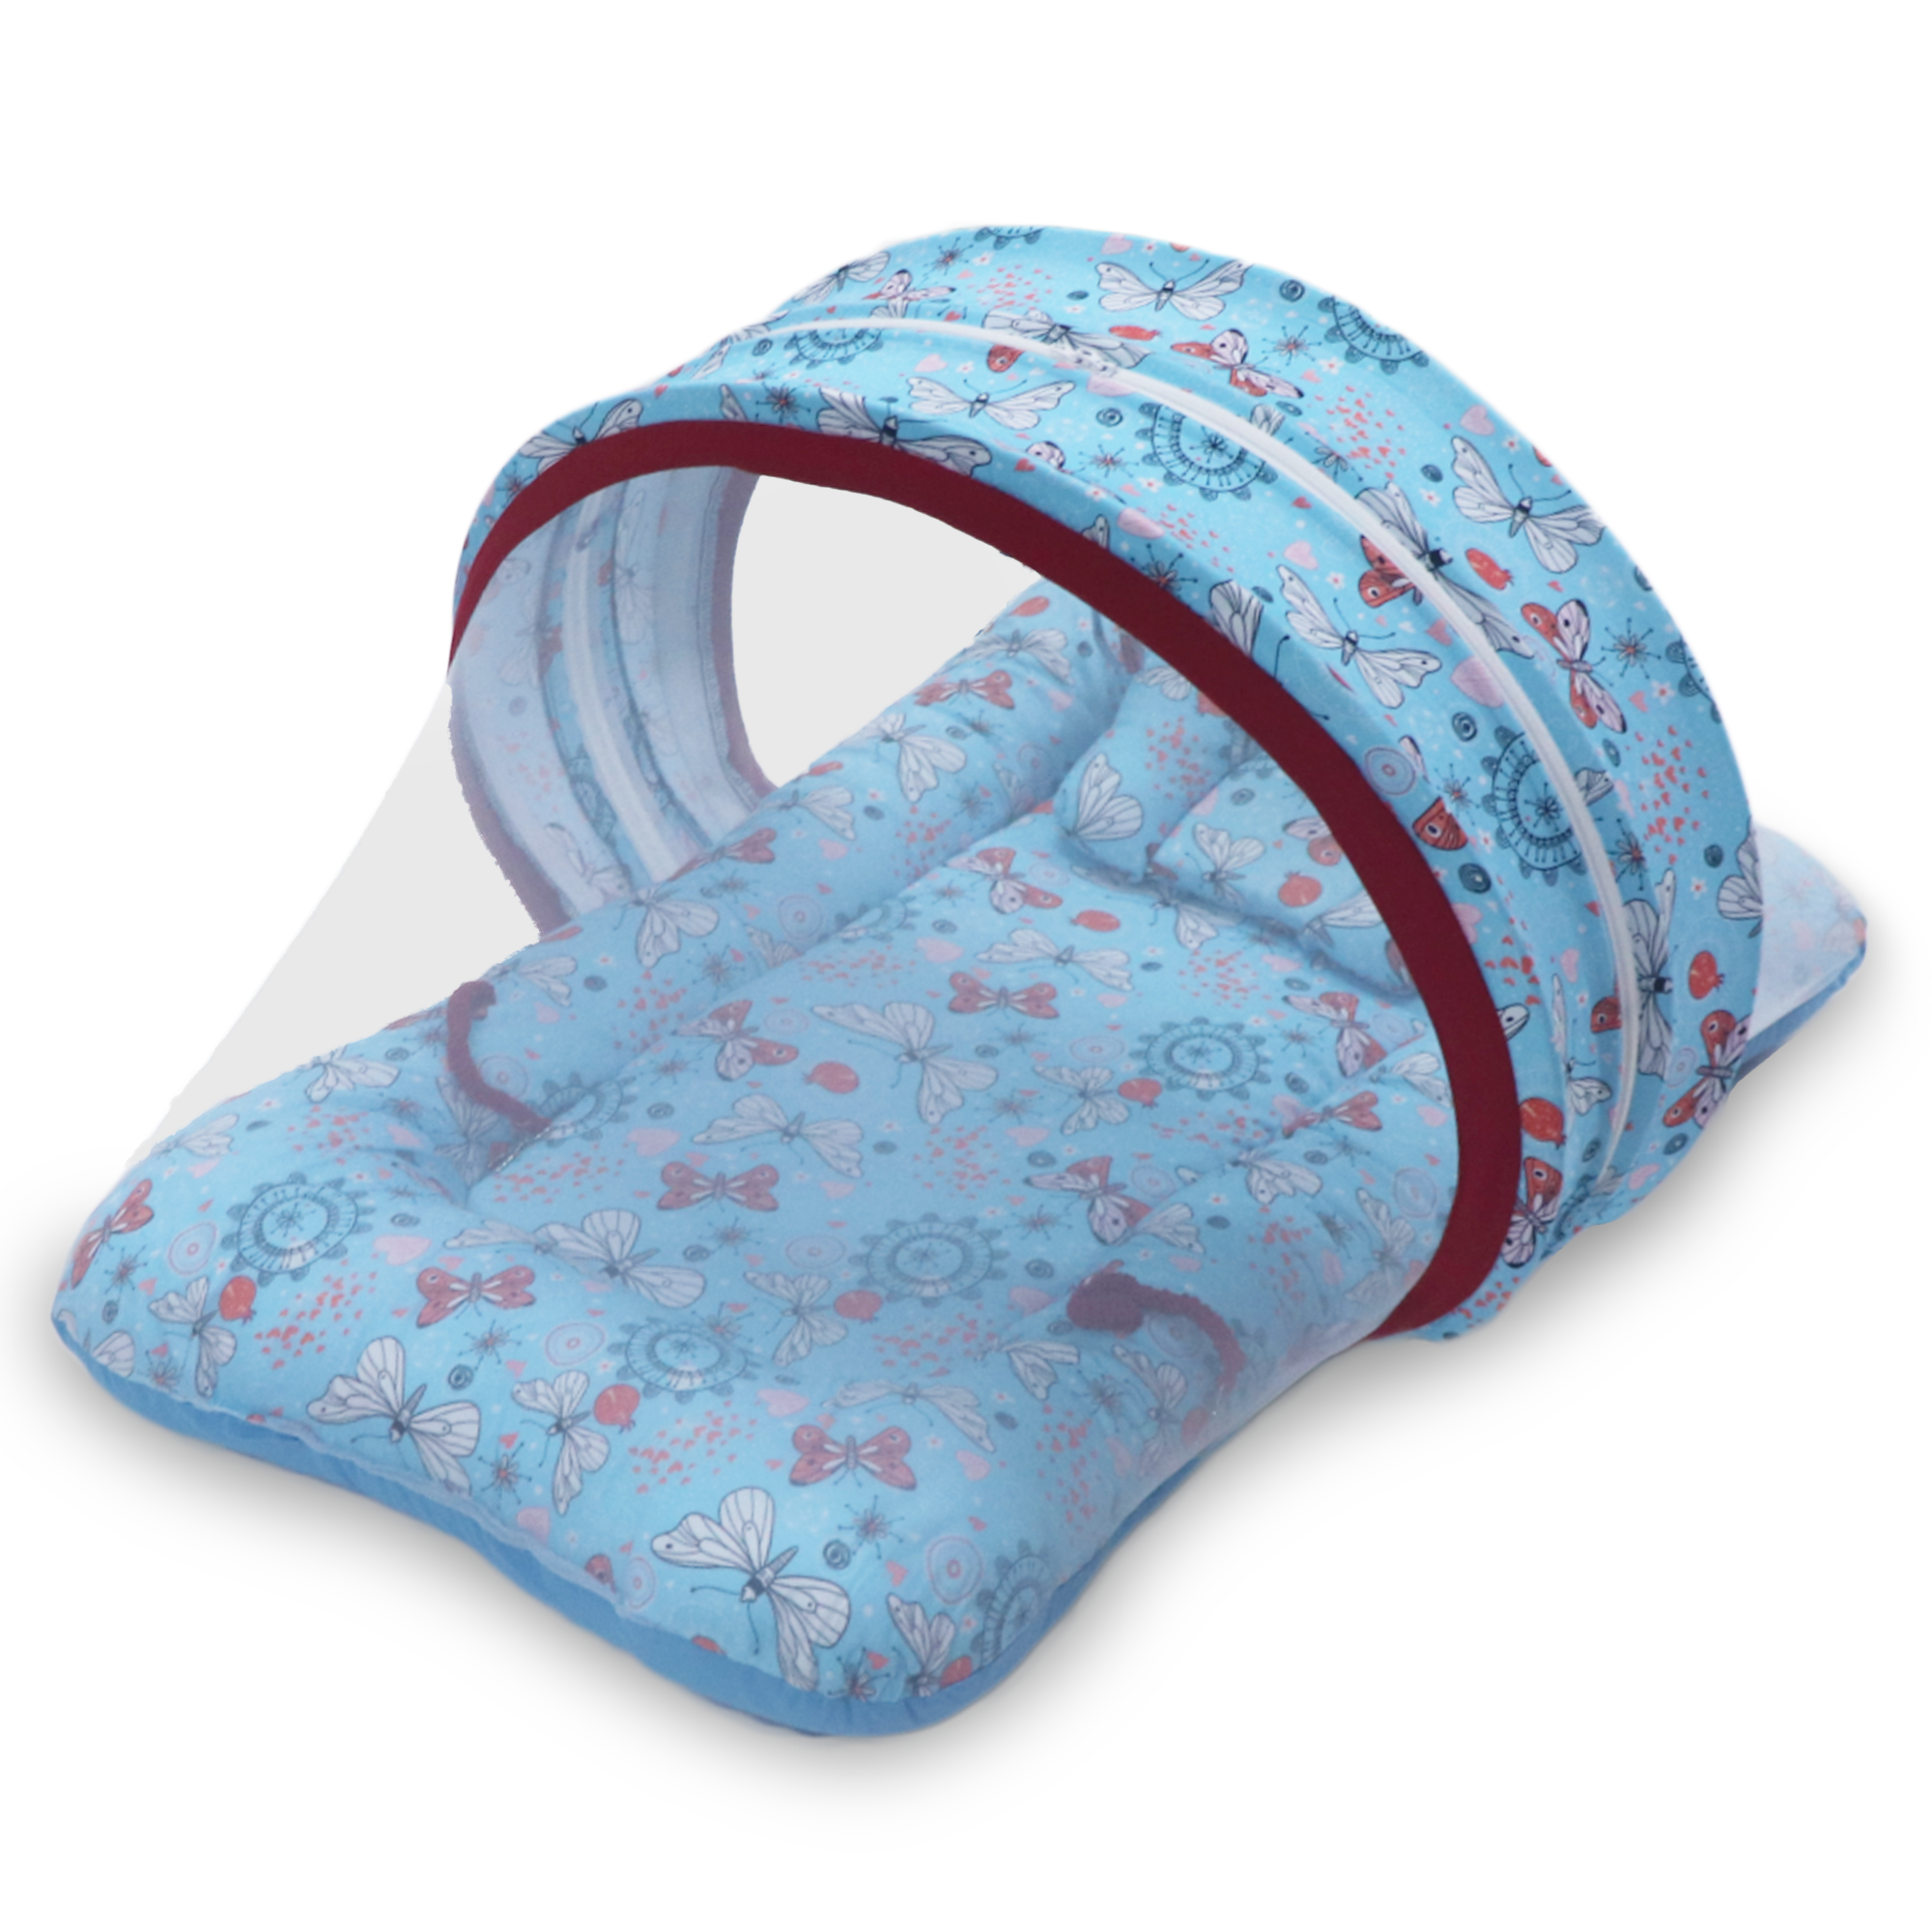 Blue Butterfly -  Kradyl Kroft Bassinet Style Mosquito Net Bedding for Infants